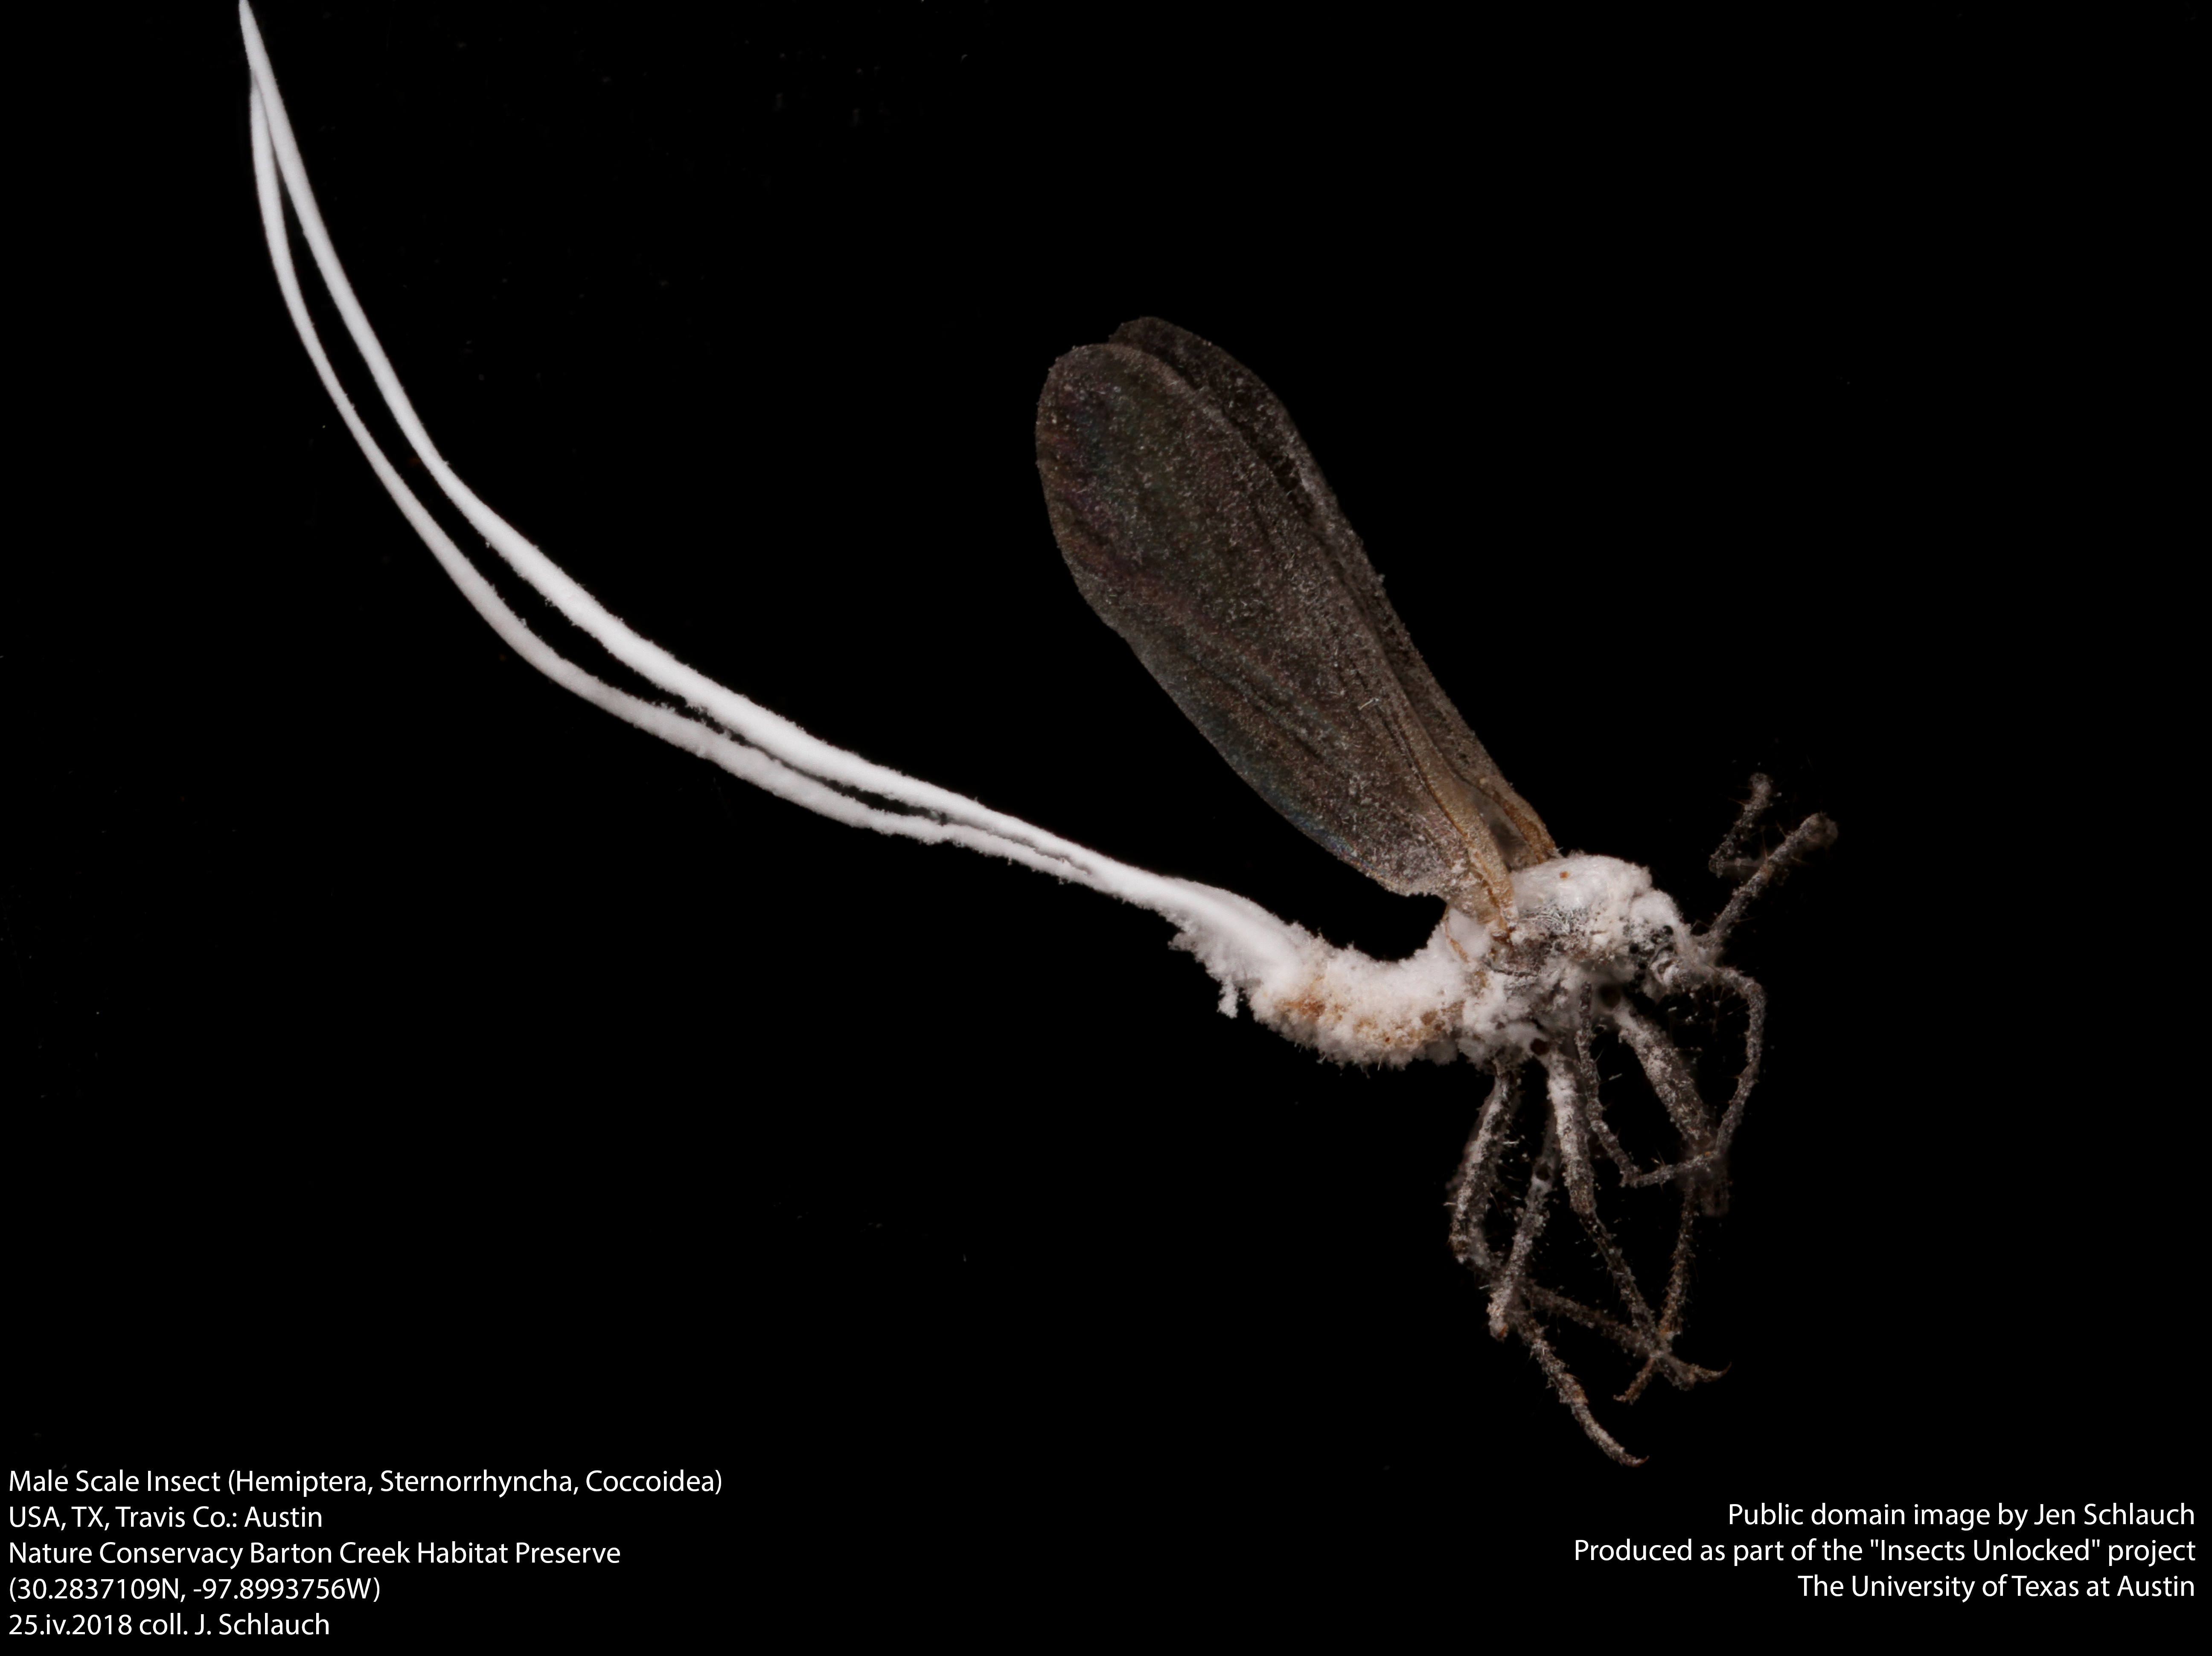 Male scale insect (hemiptera, sternorrhyncha, coccoidea) photo